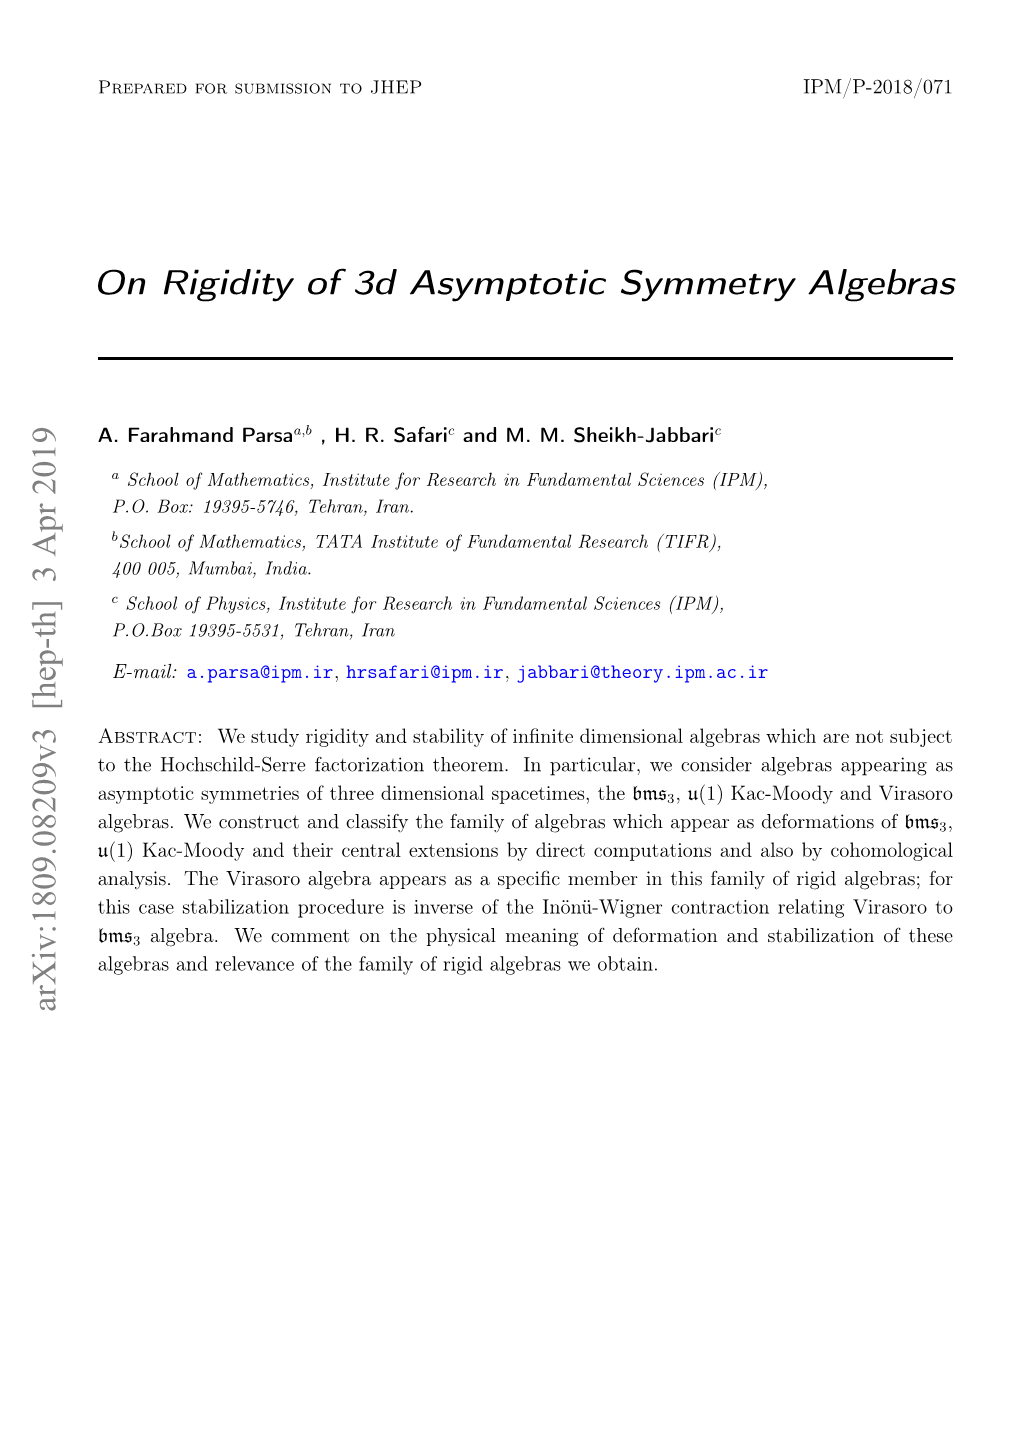 On Rigidity of 3D Asymptotic Symmetry Algebras